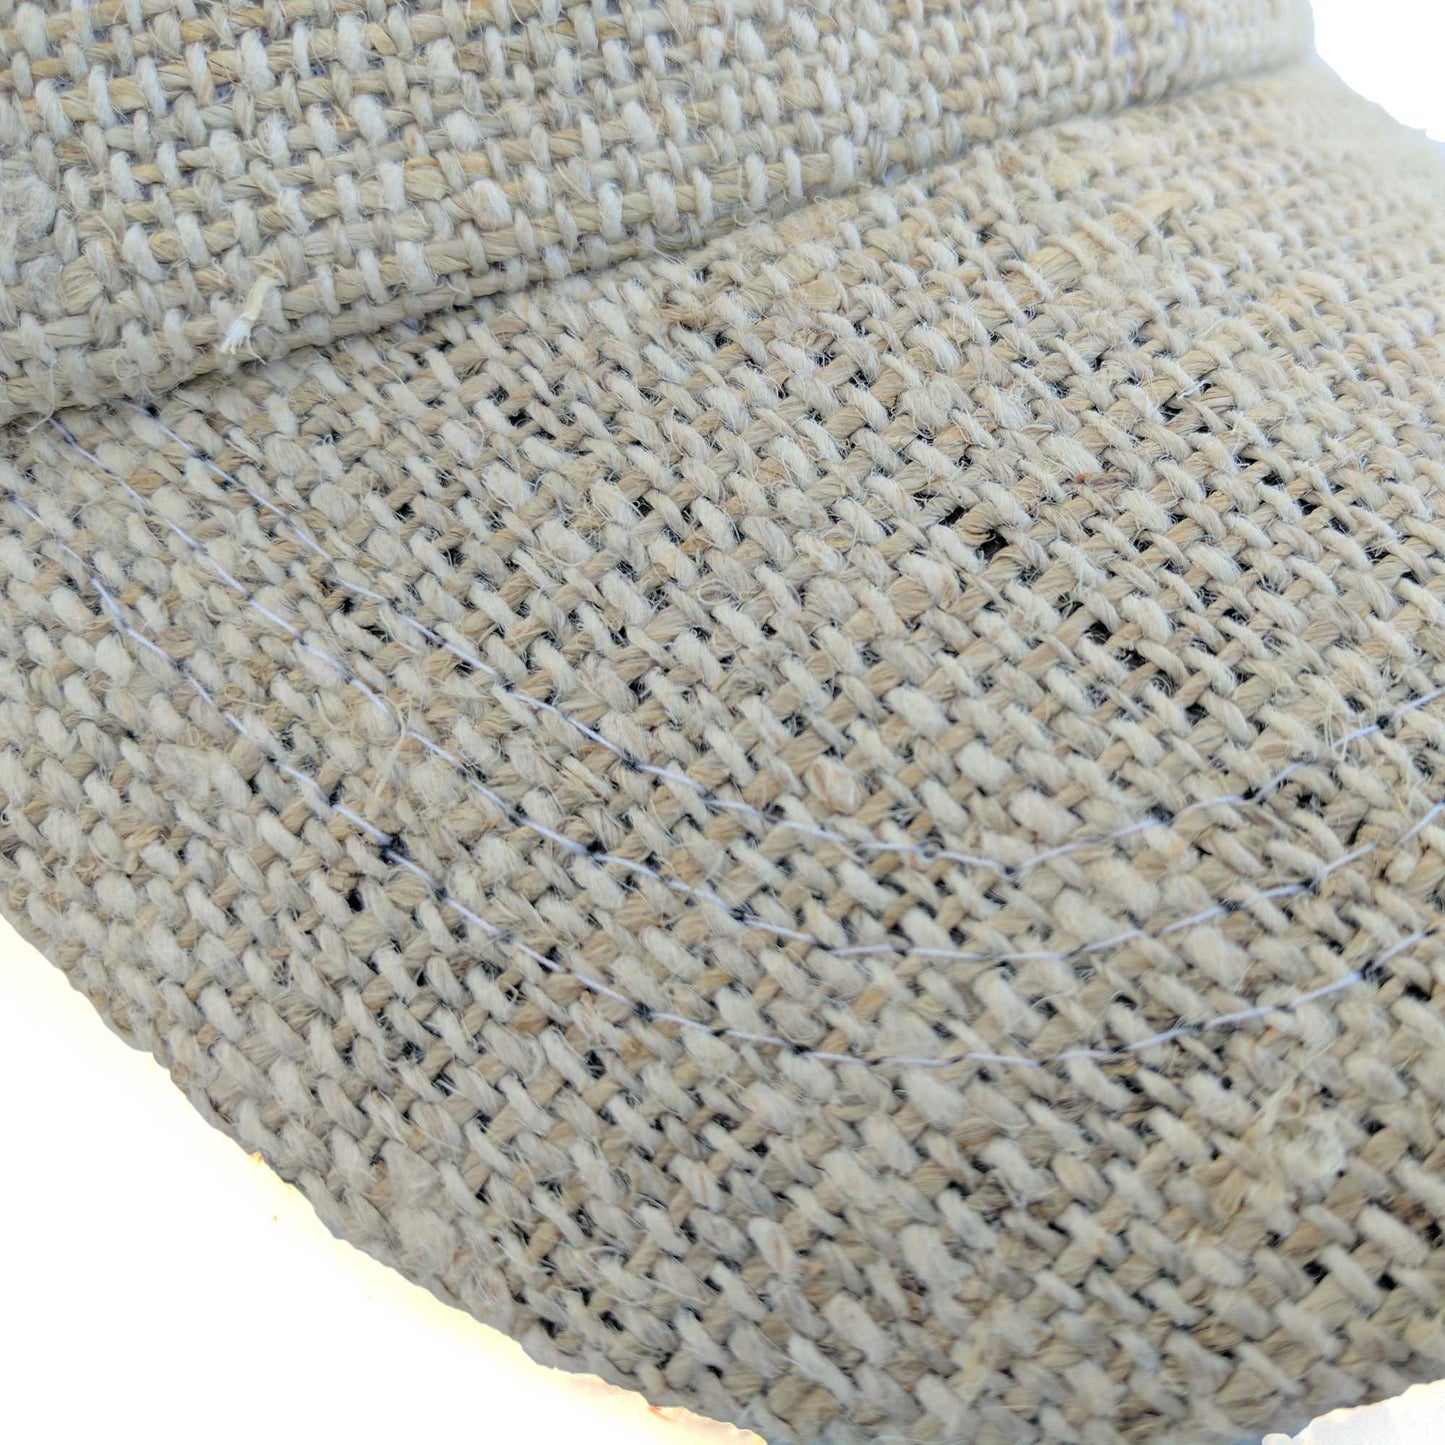 Hemp cap made from 100% pure hand-woven hemp